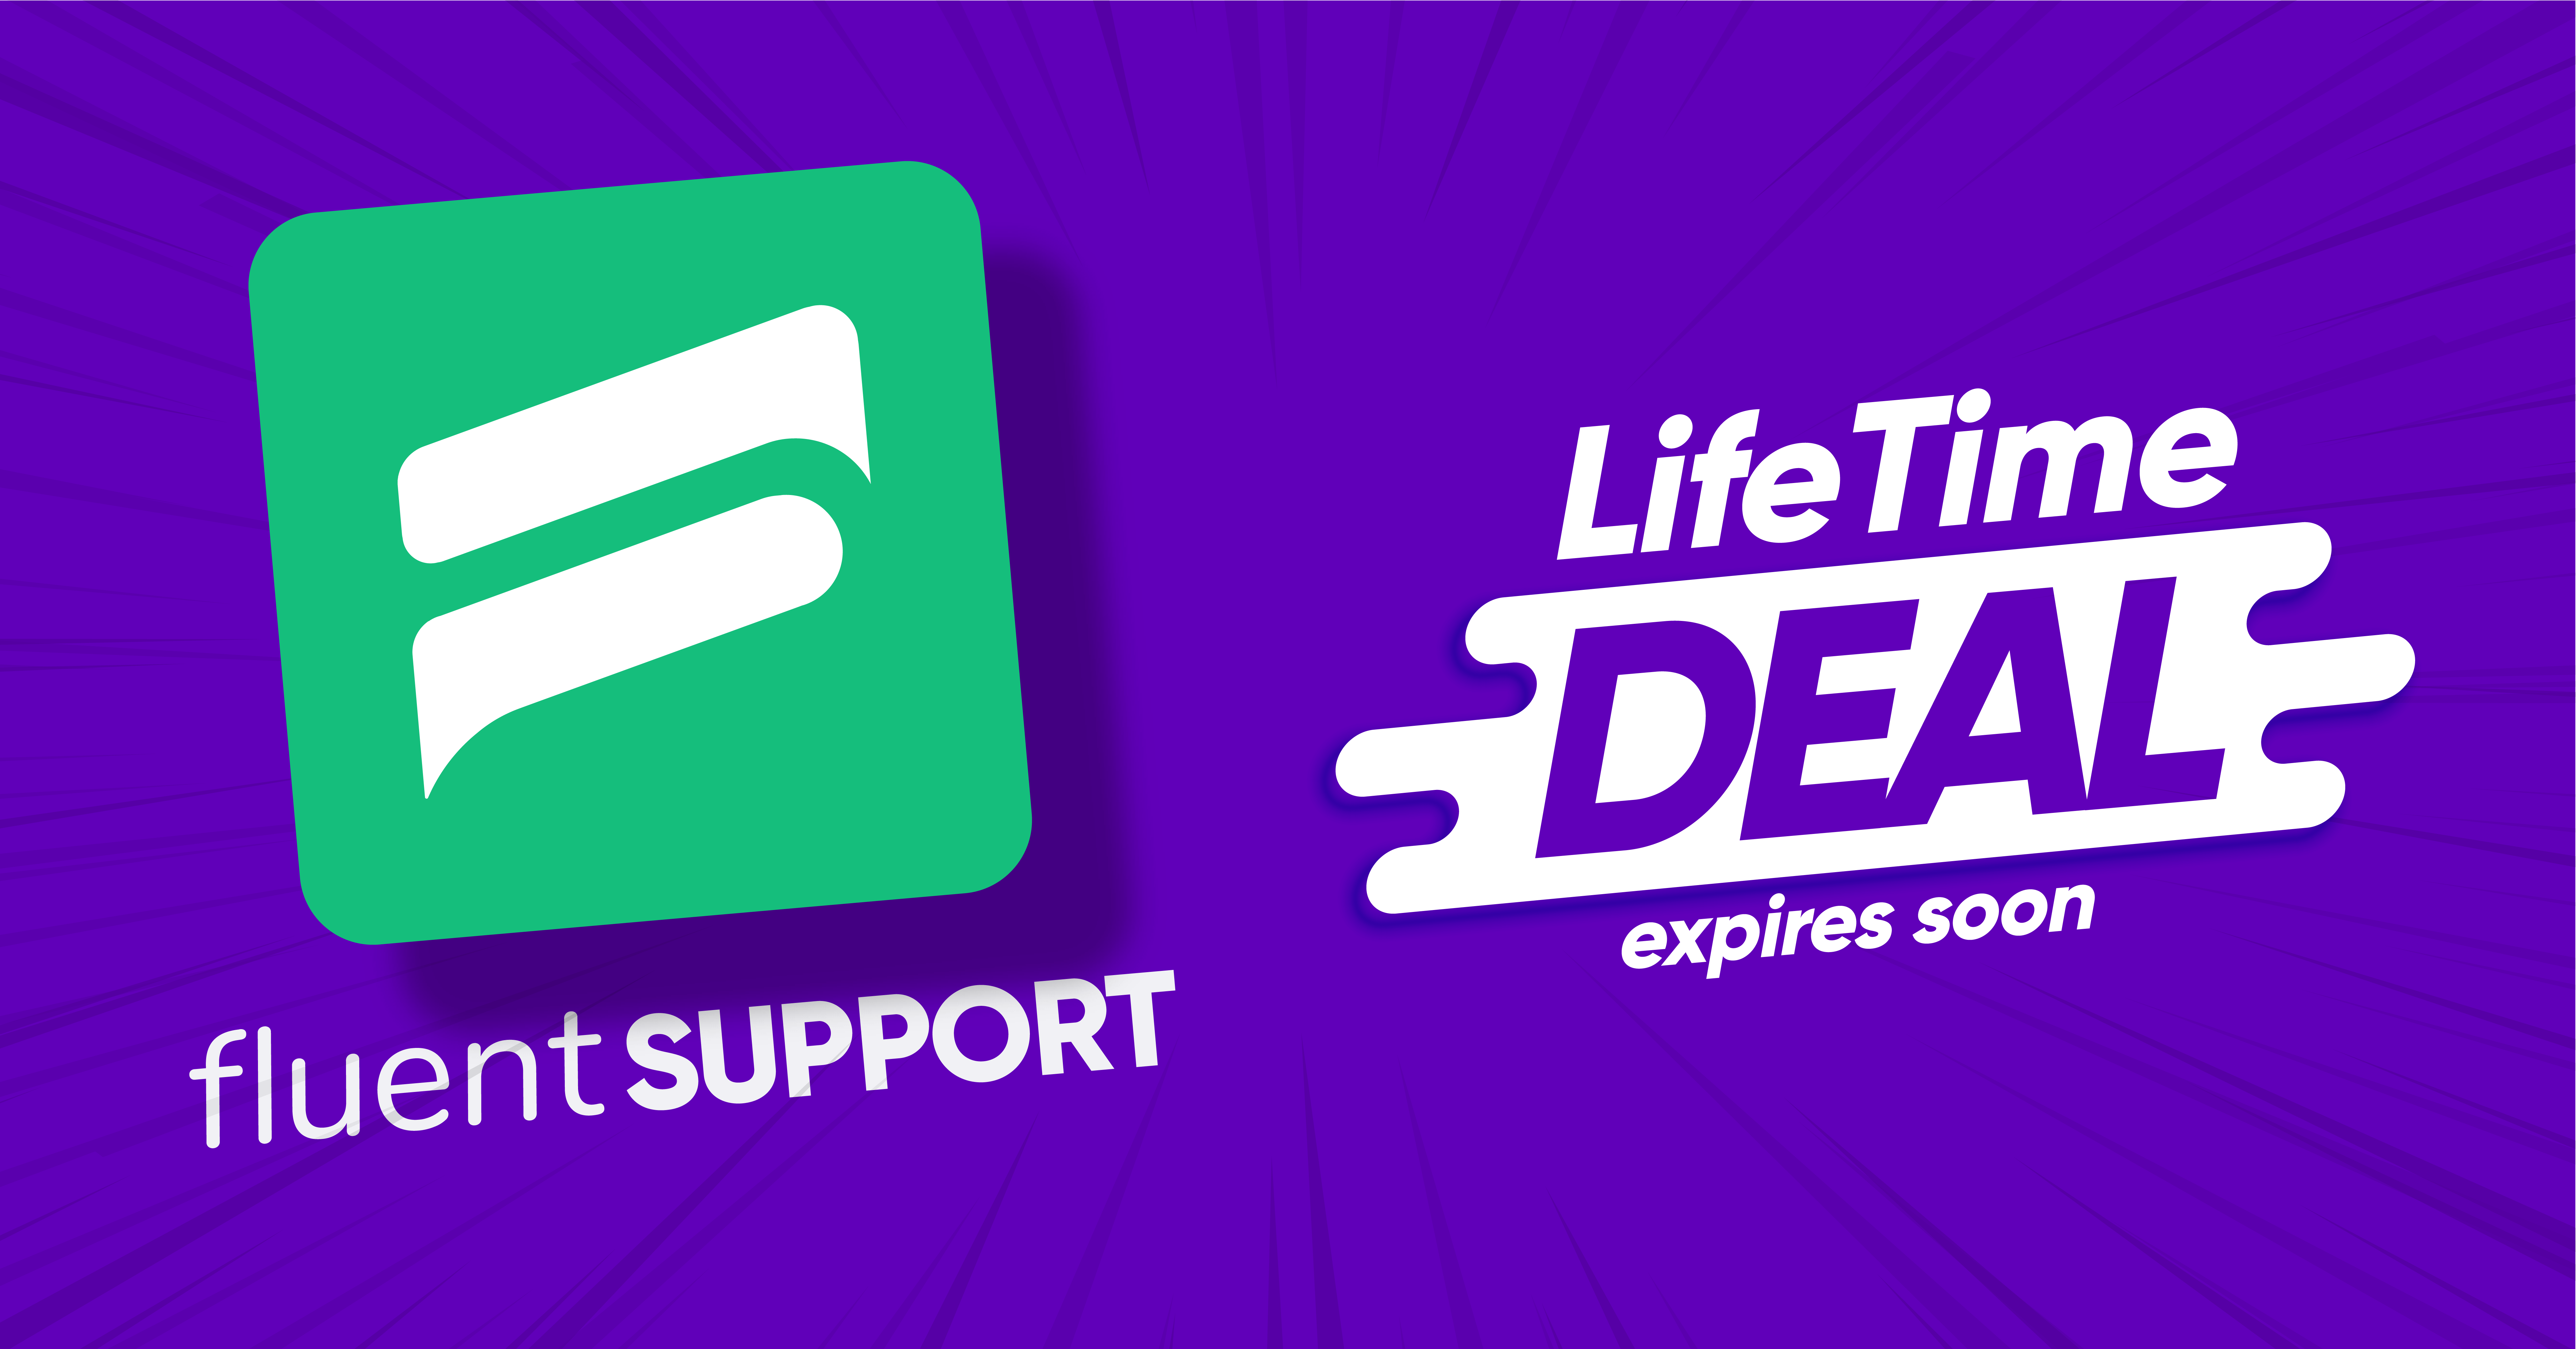 Fluent Support Lifetime Deal